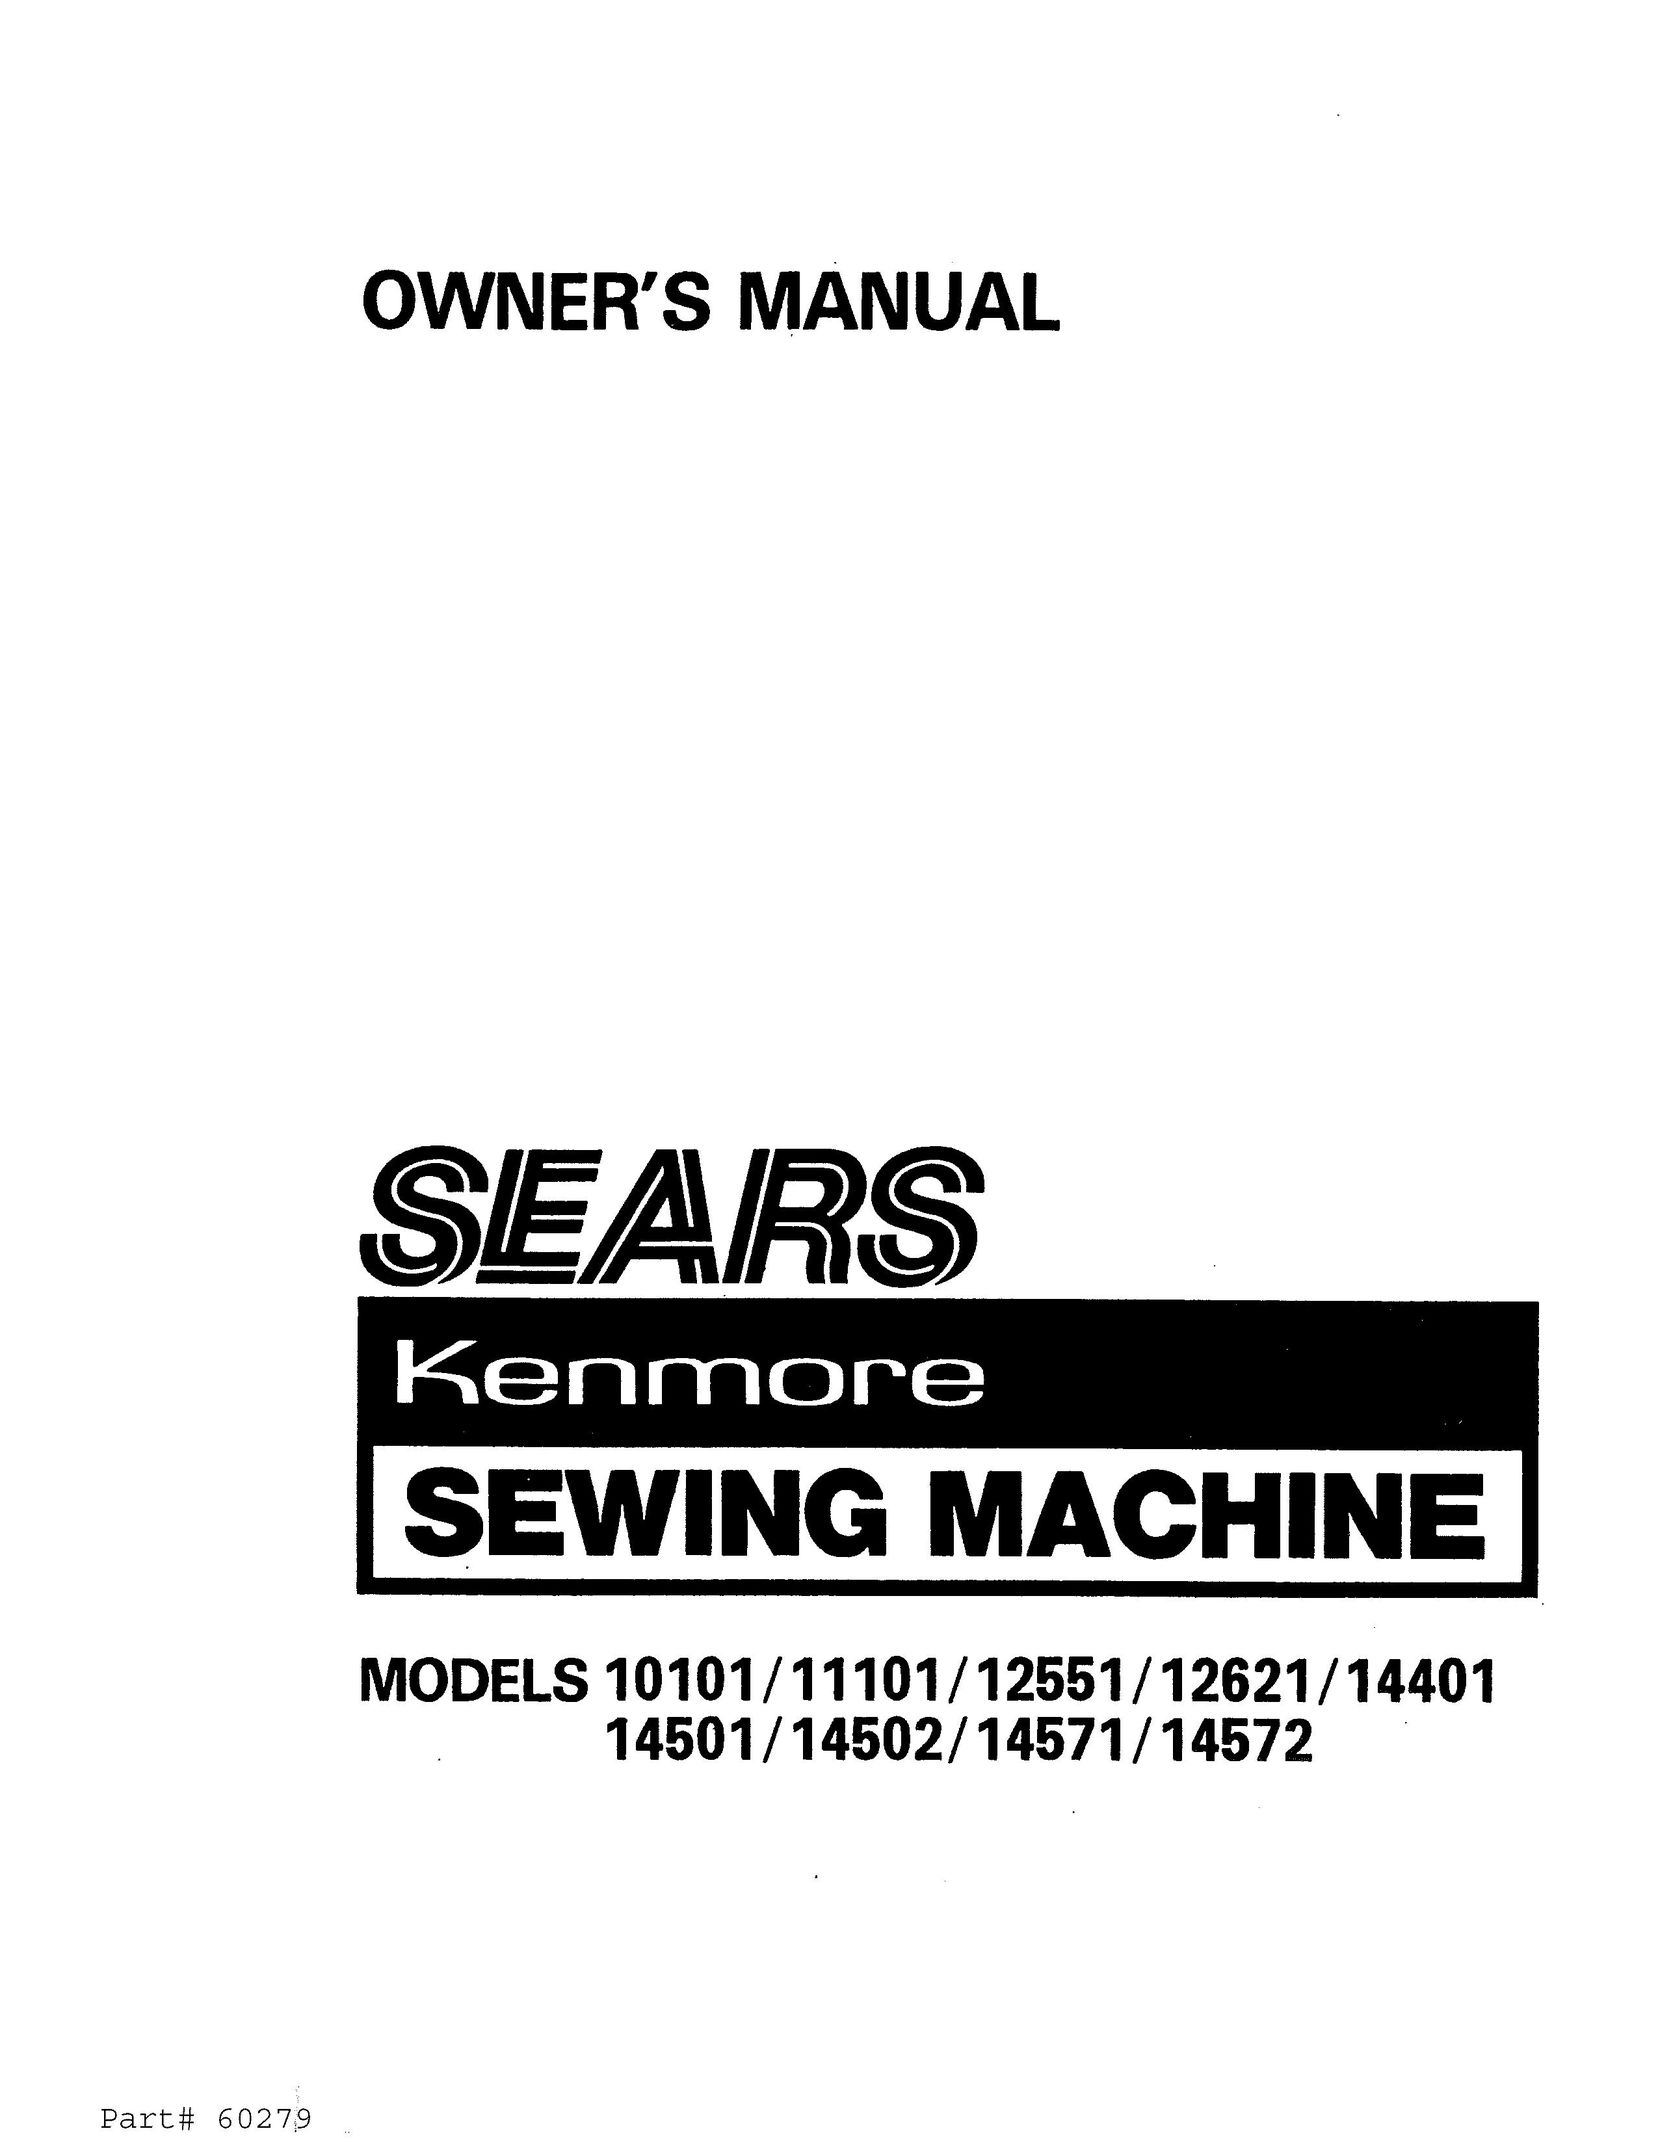 Kenmore 12621 Sewing Machine User Manual